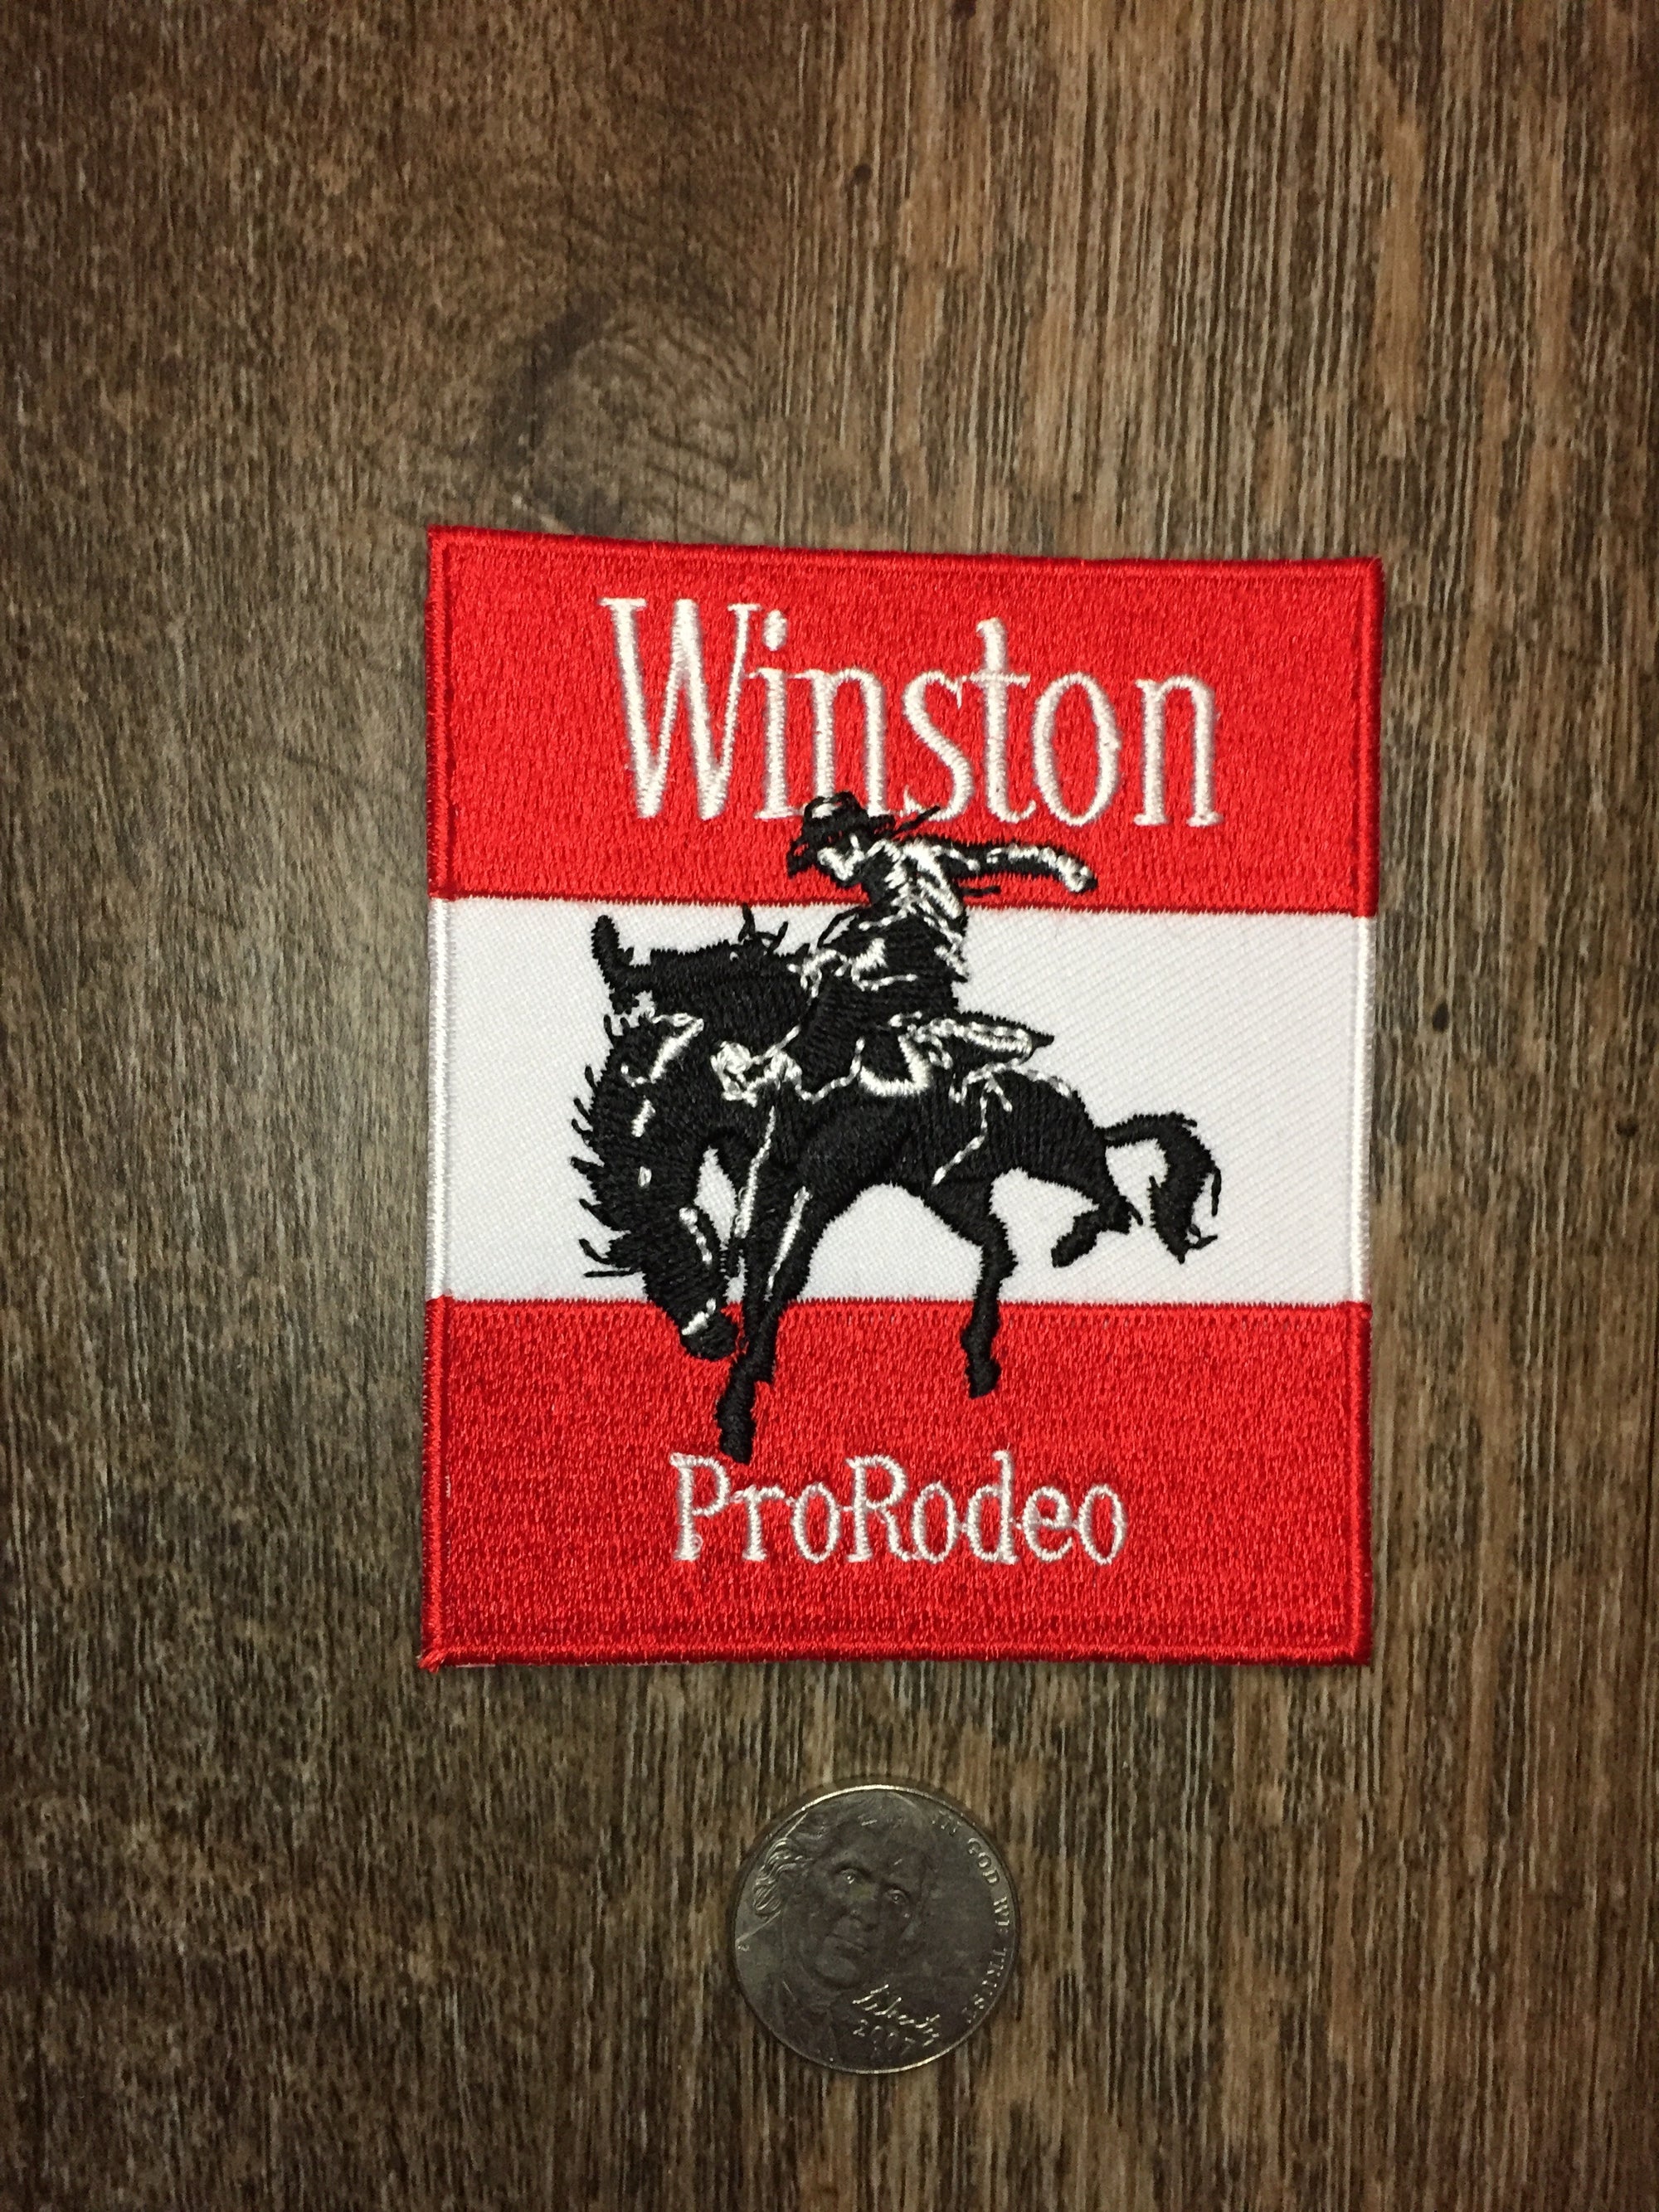 Winston Rodeo